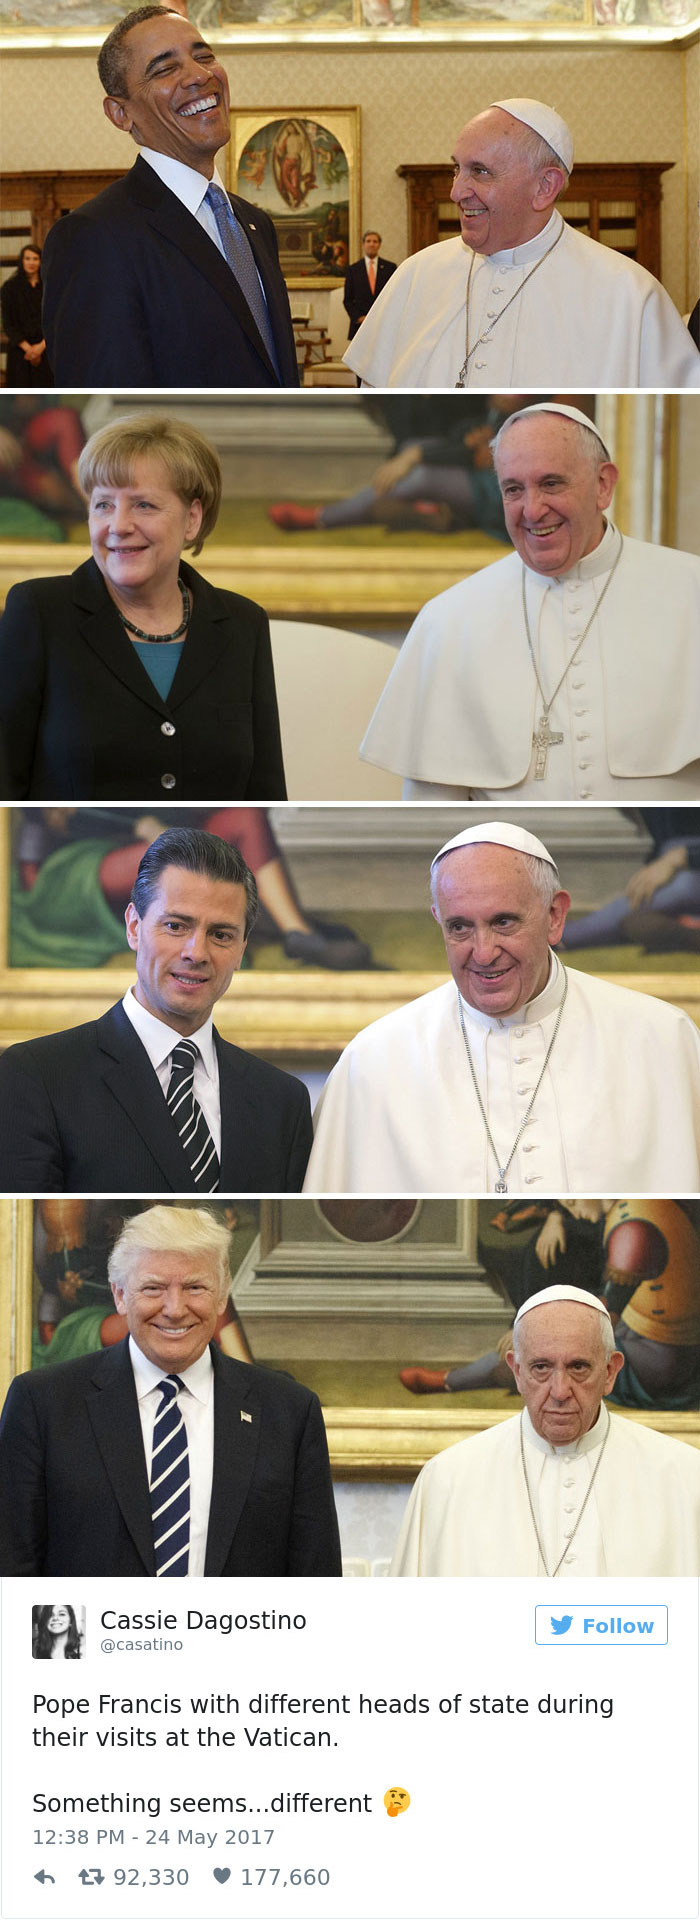 15 Meme mimik muka Paus Francis saat bertemu Donald Trump, kocak